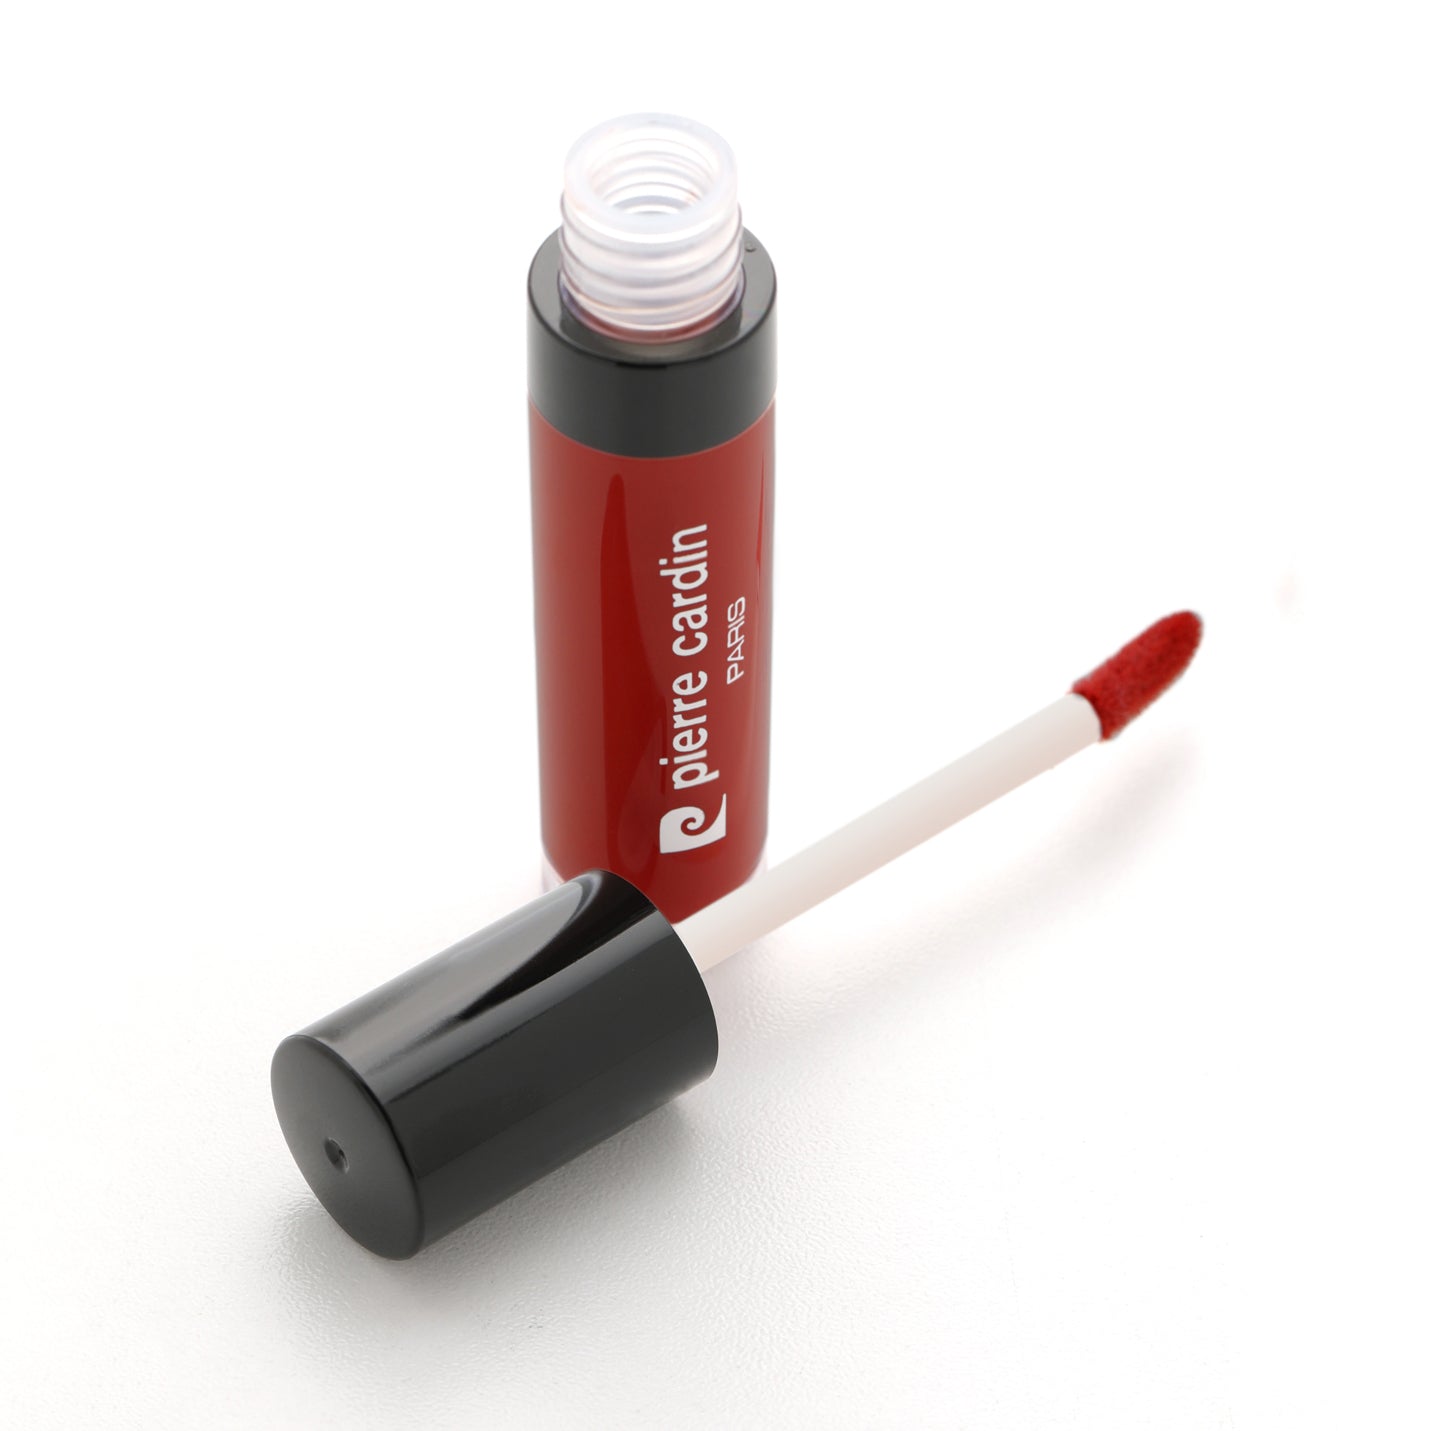 Pierre Cardin Staylong Lipcolor-Kissproof Blood Red 326 - 5 ml